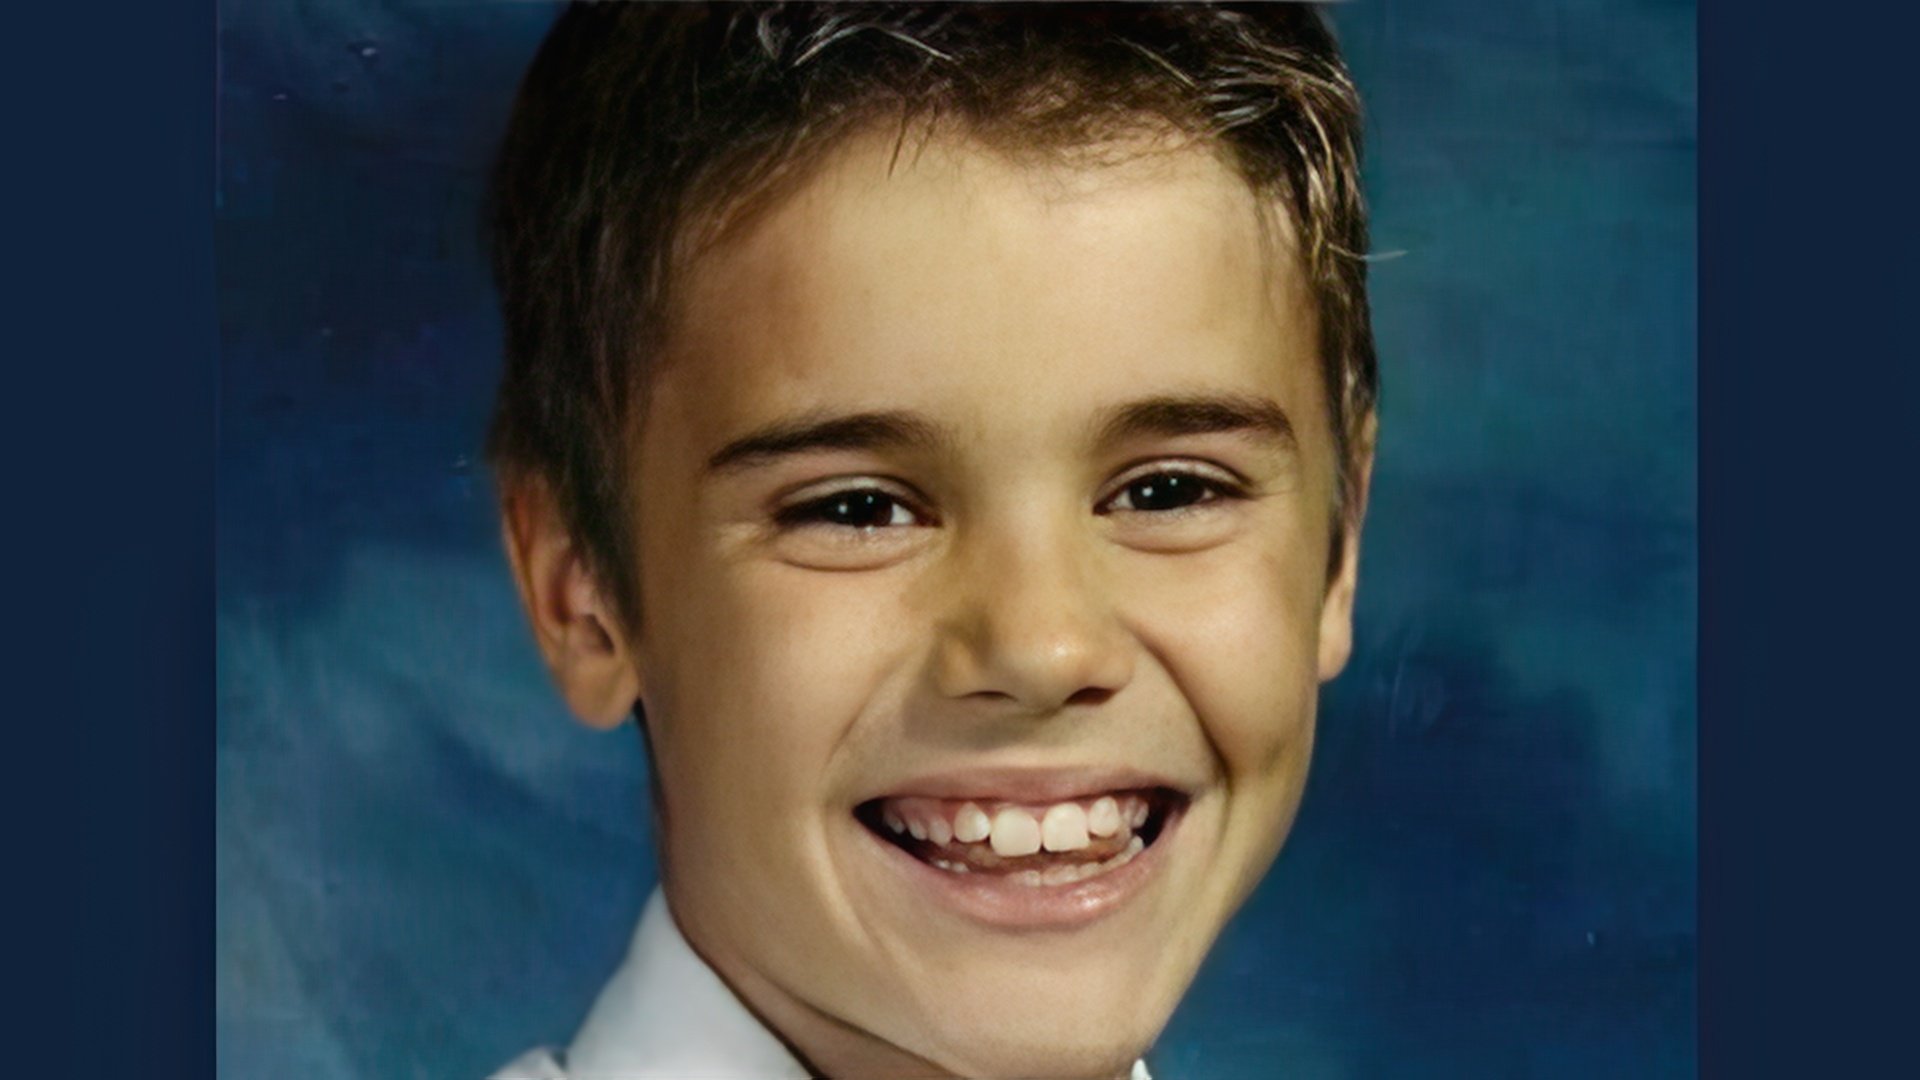 School photo of Justin Bieber